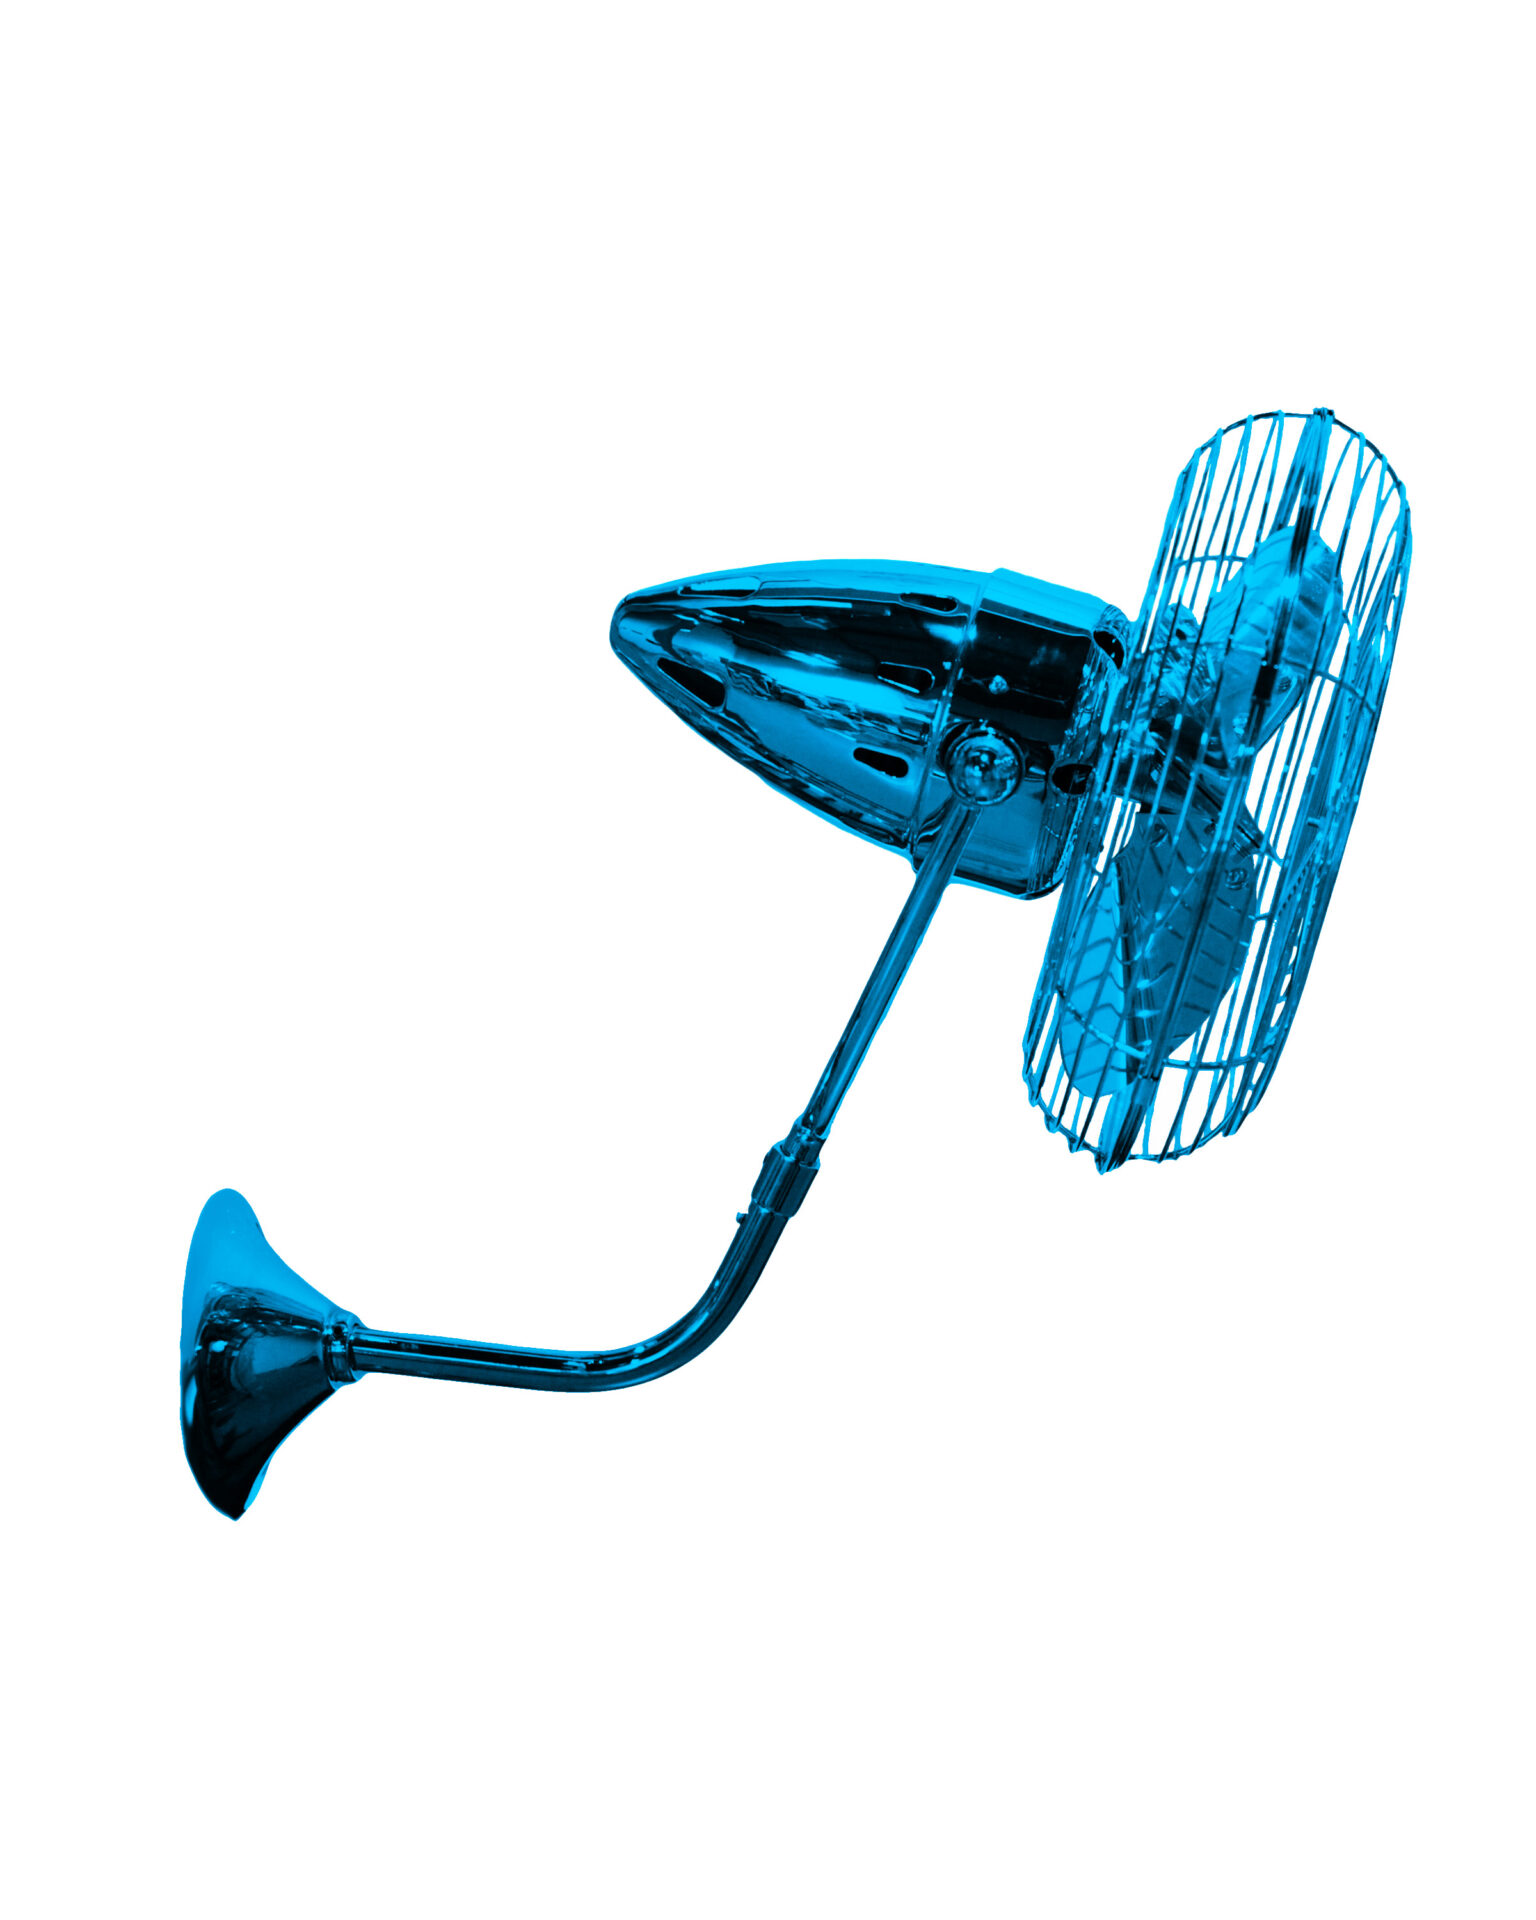 Bruna Parede Wall Fan in Agua Marinha / Light Blue Finish Made by Matthews Fan Company